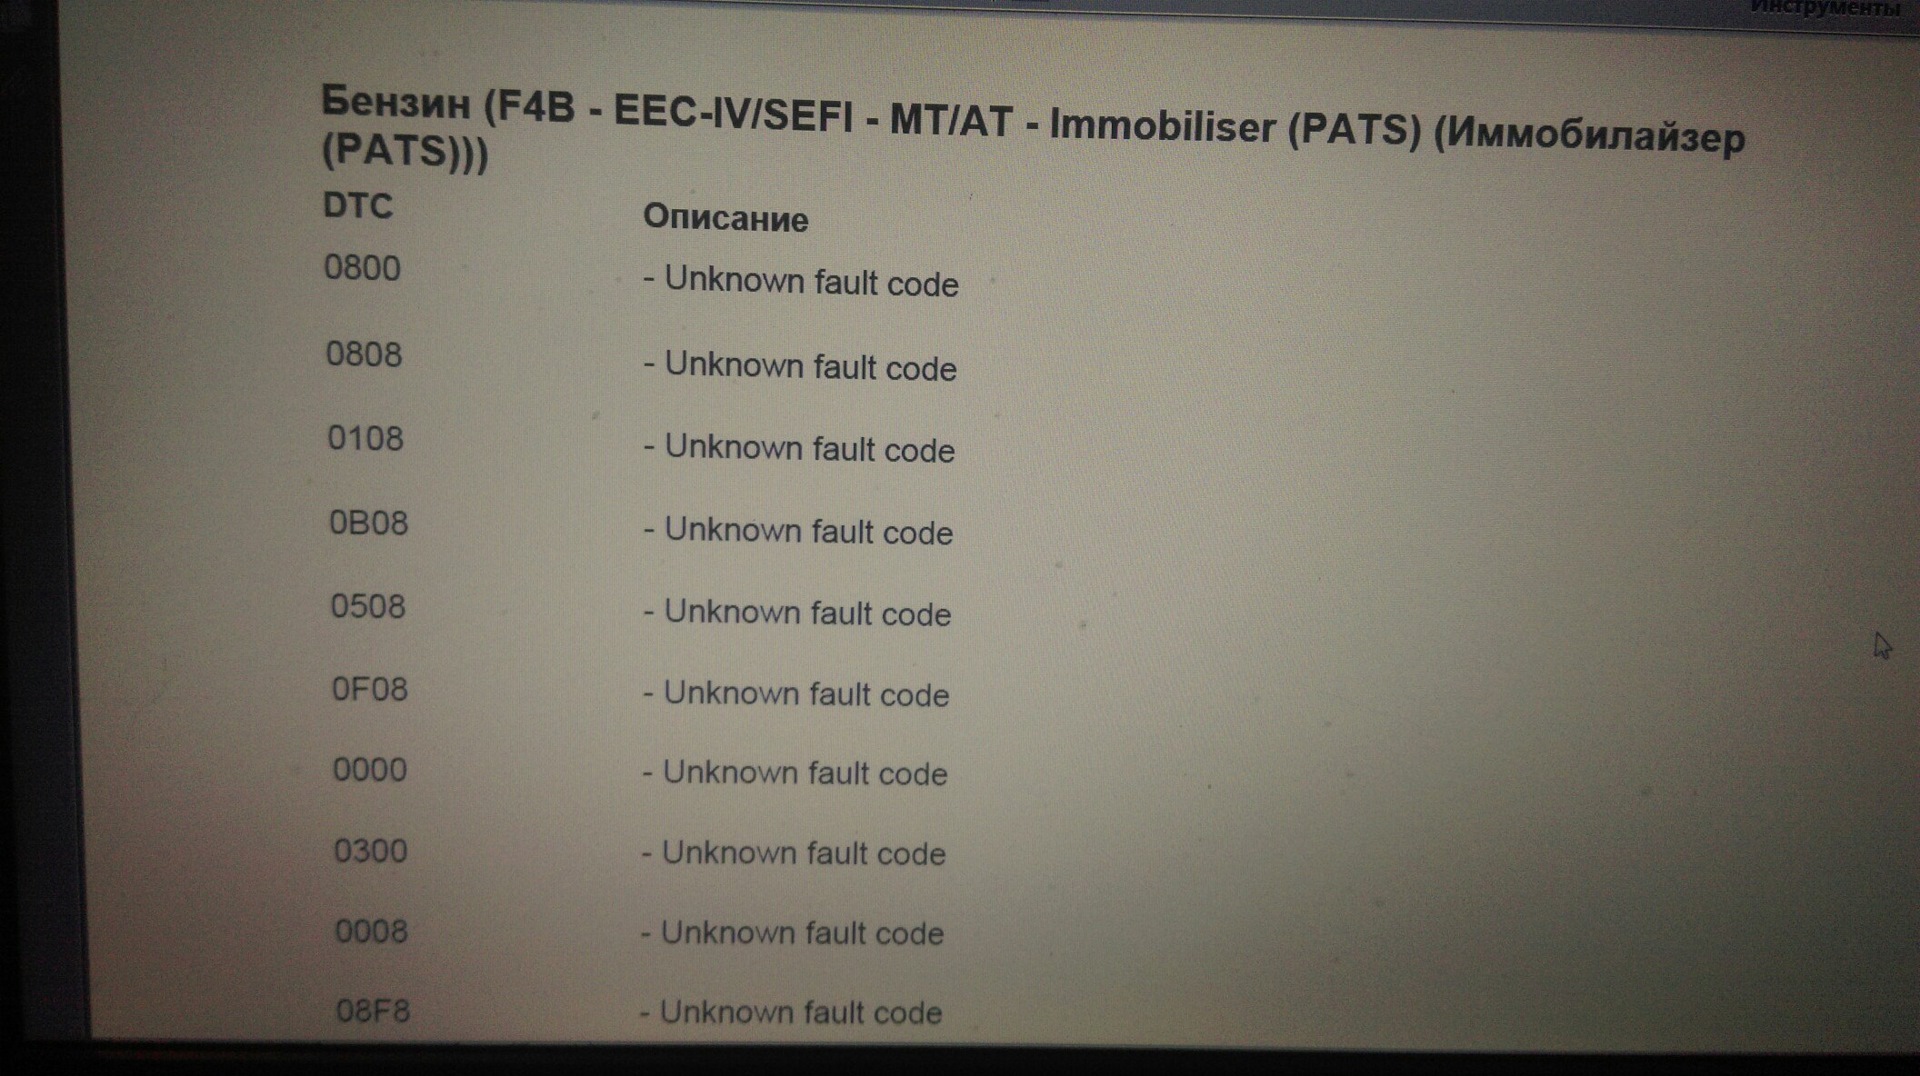 Escort pats codes ford